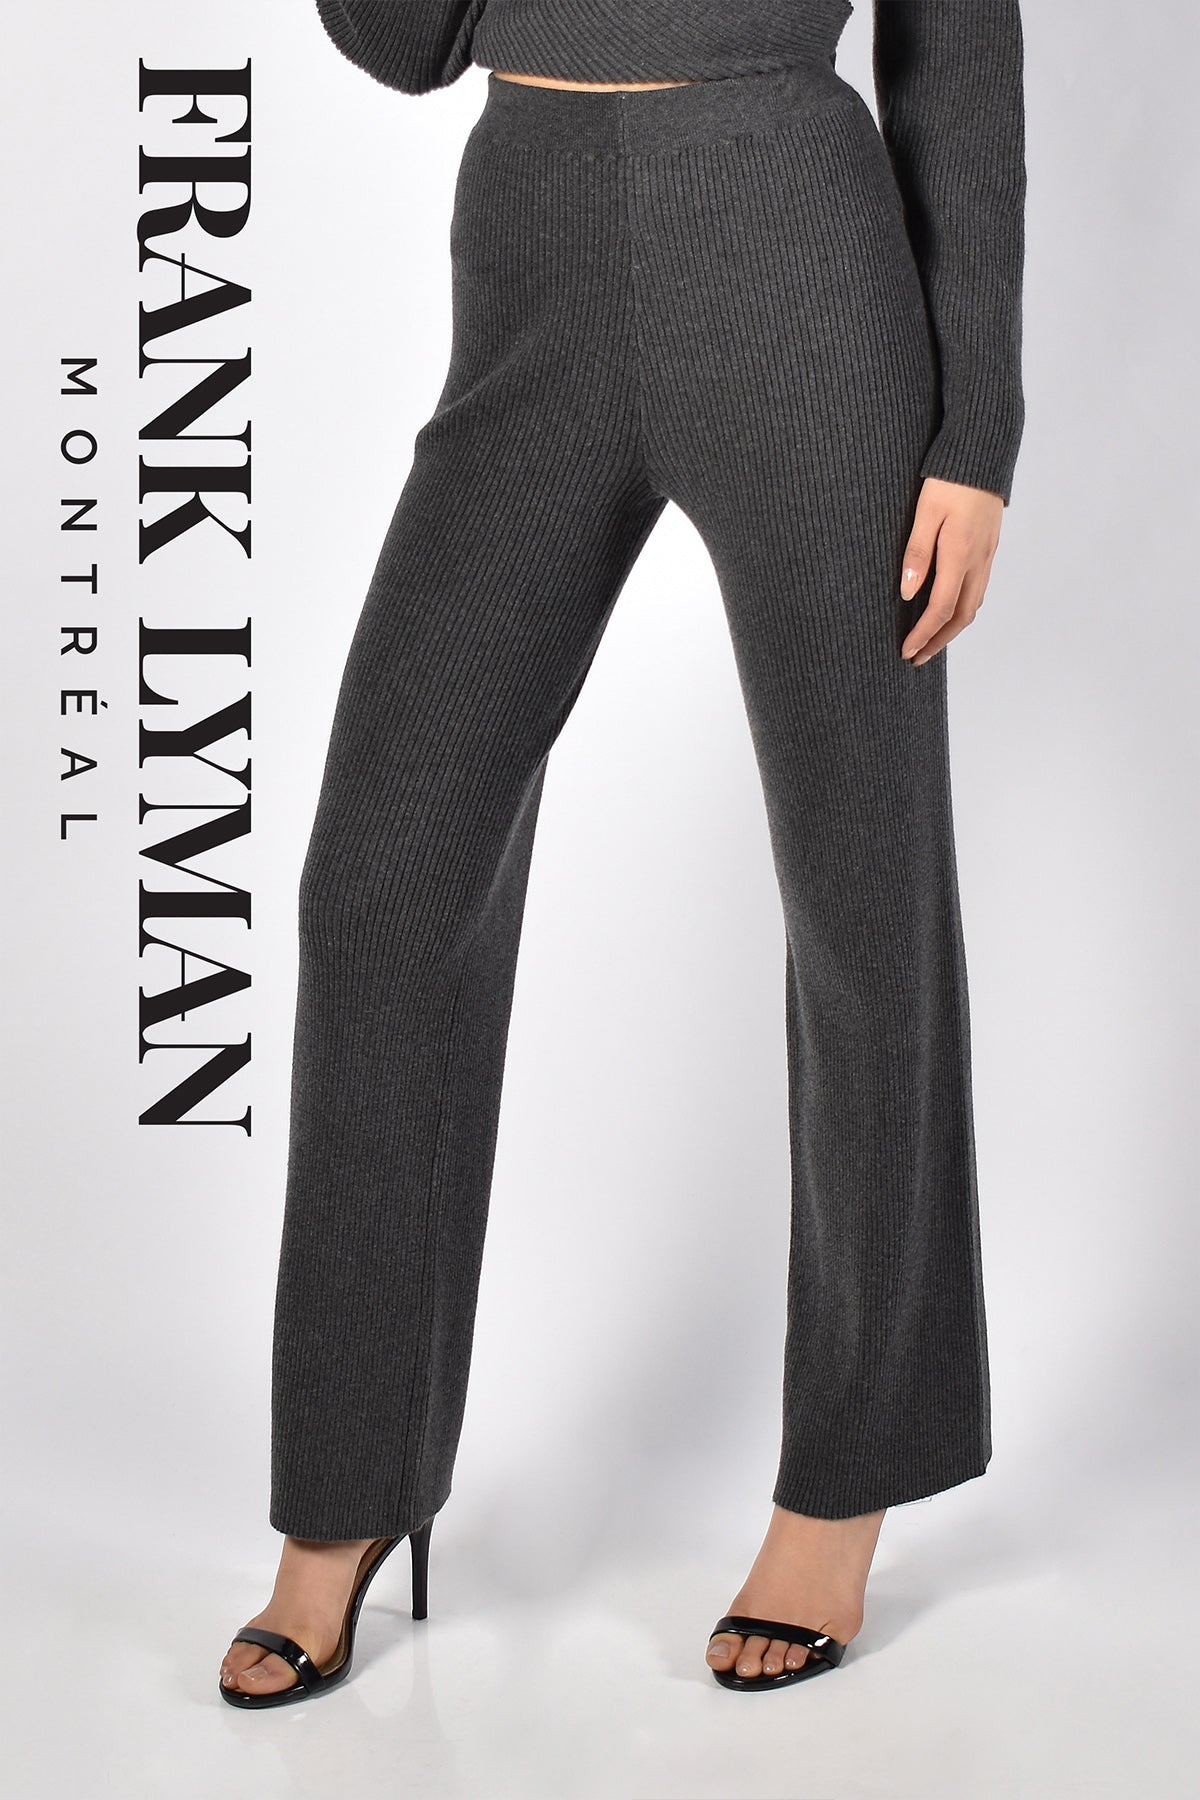 Frank Lyman Montreal Pants-Buy Frank Lyman Clothing Online Canada-Frank Lyman Montreal Fall 2021-Frank Lyman Montreal Online Shop